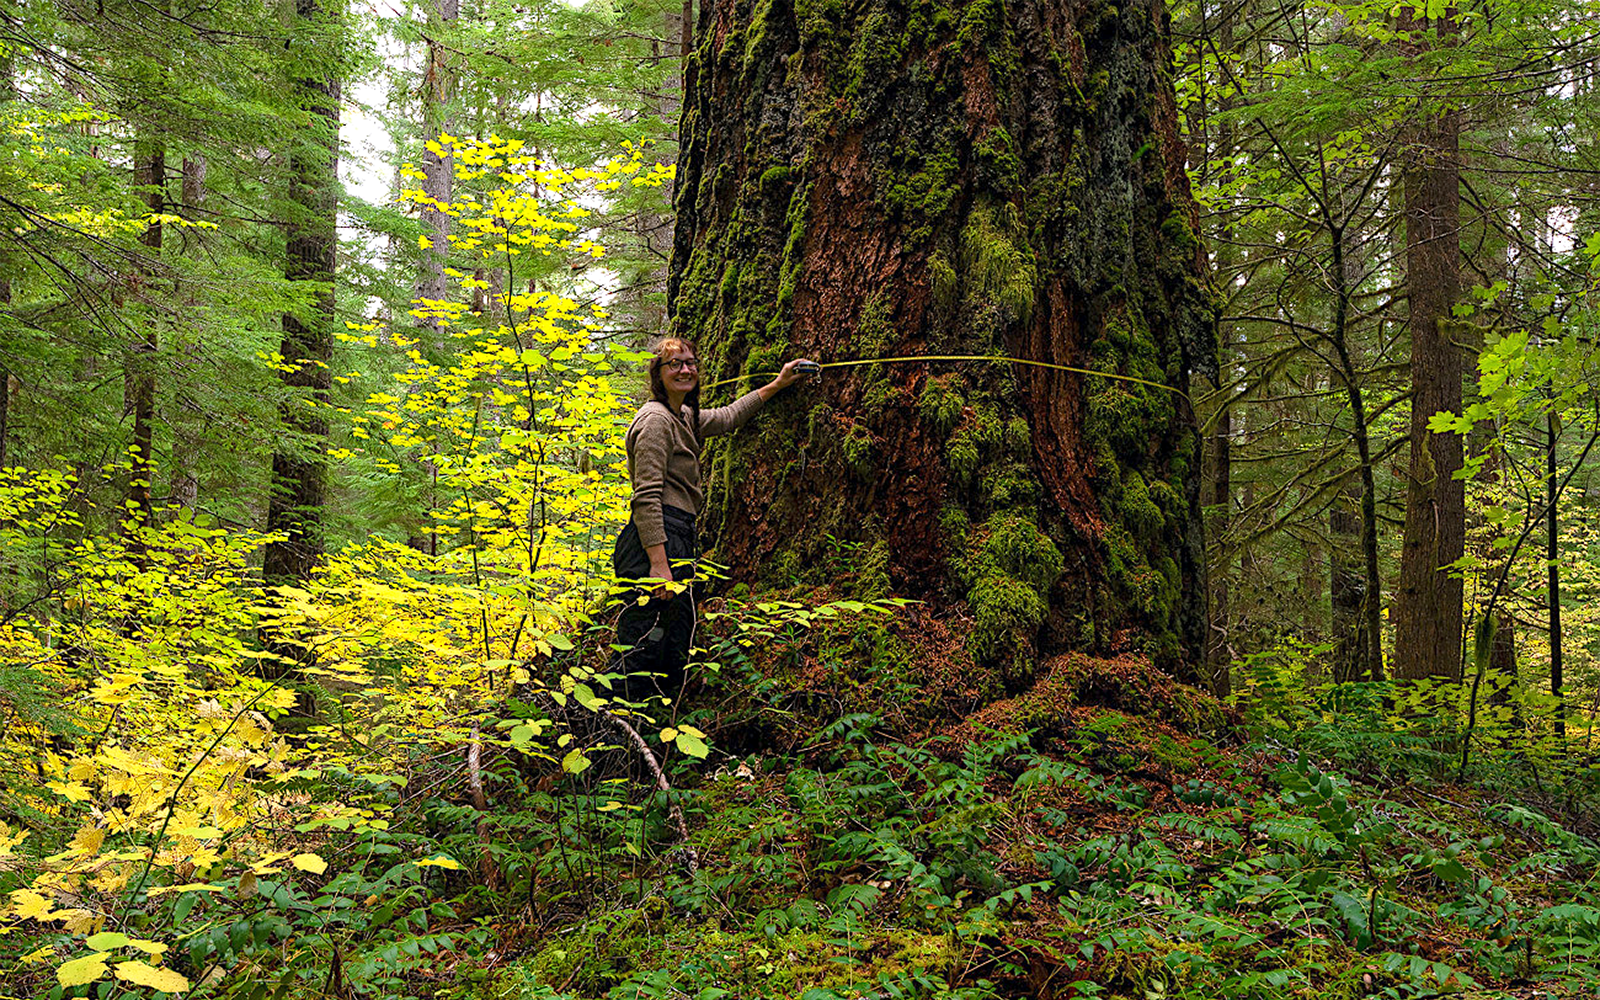 Press Release: Cascadia Wildlands Receives Historic $500,000 Grant